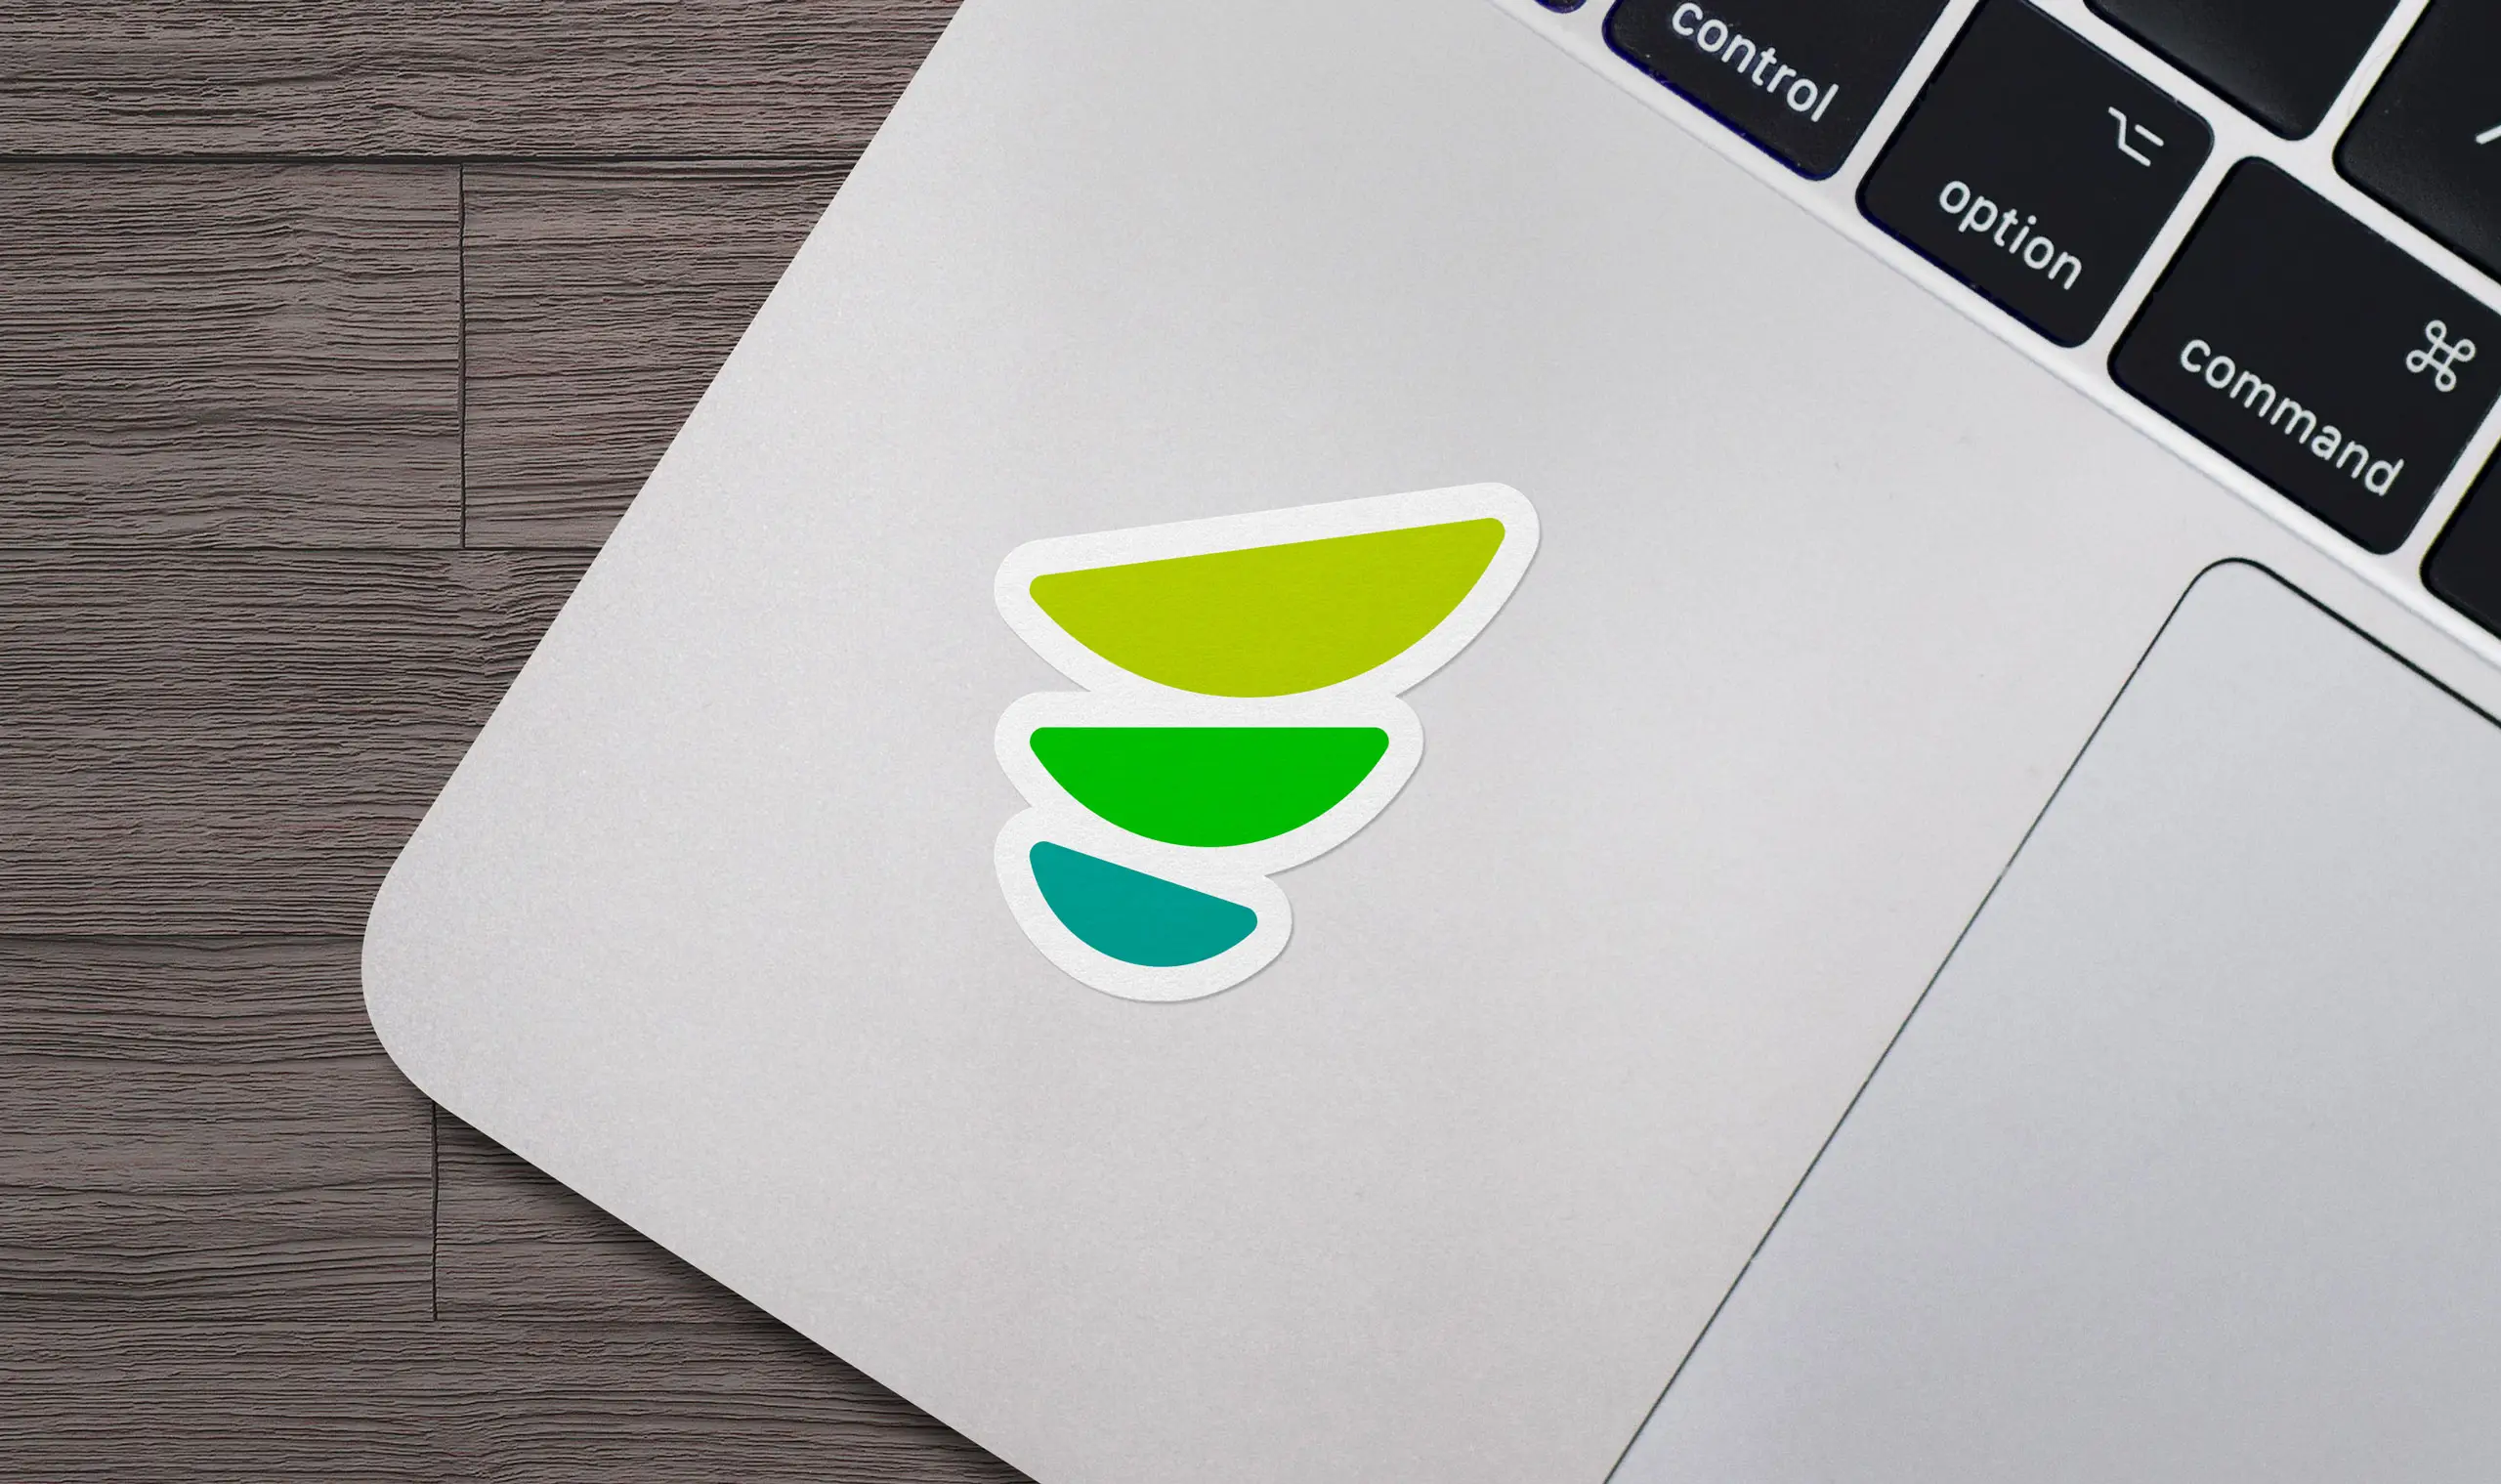 Foodstack sticker on a laptop, demonstrating everyday branding usage.